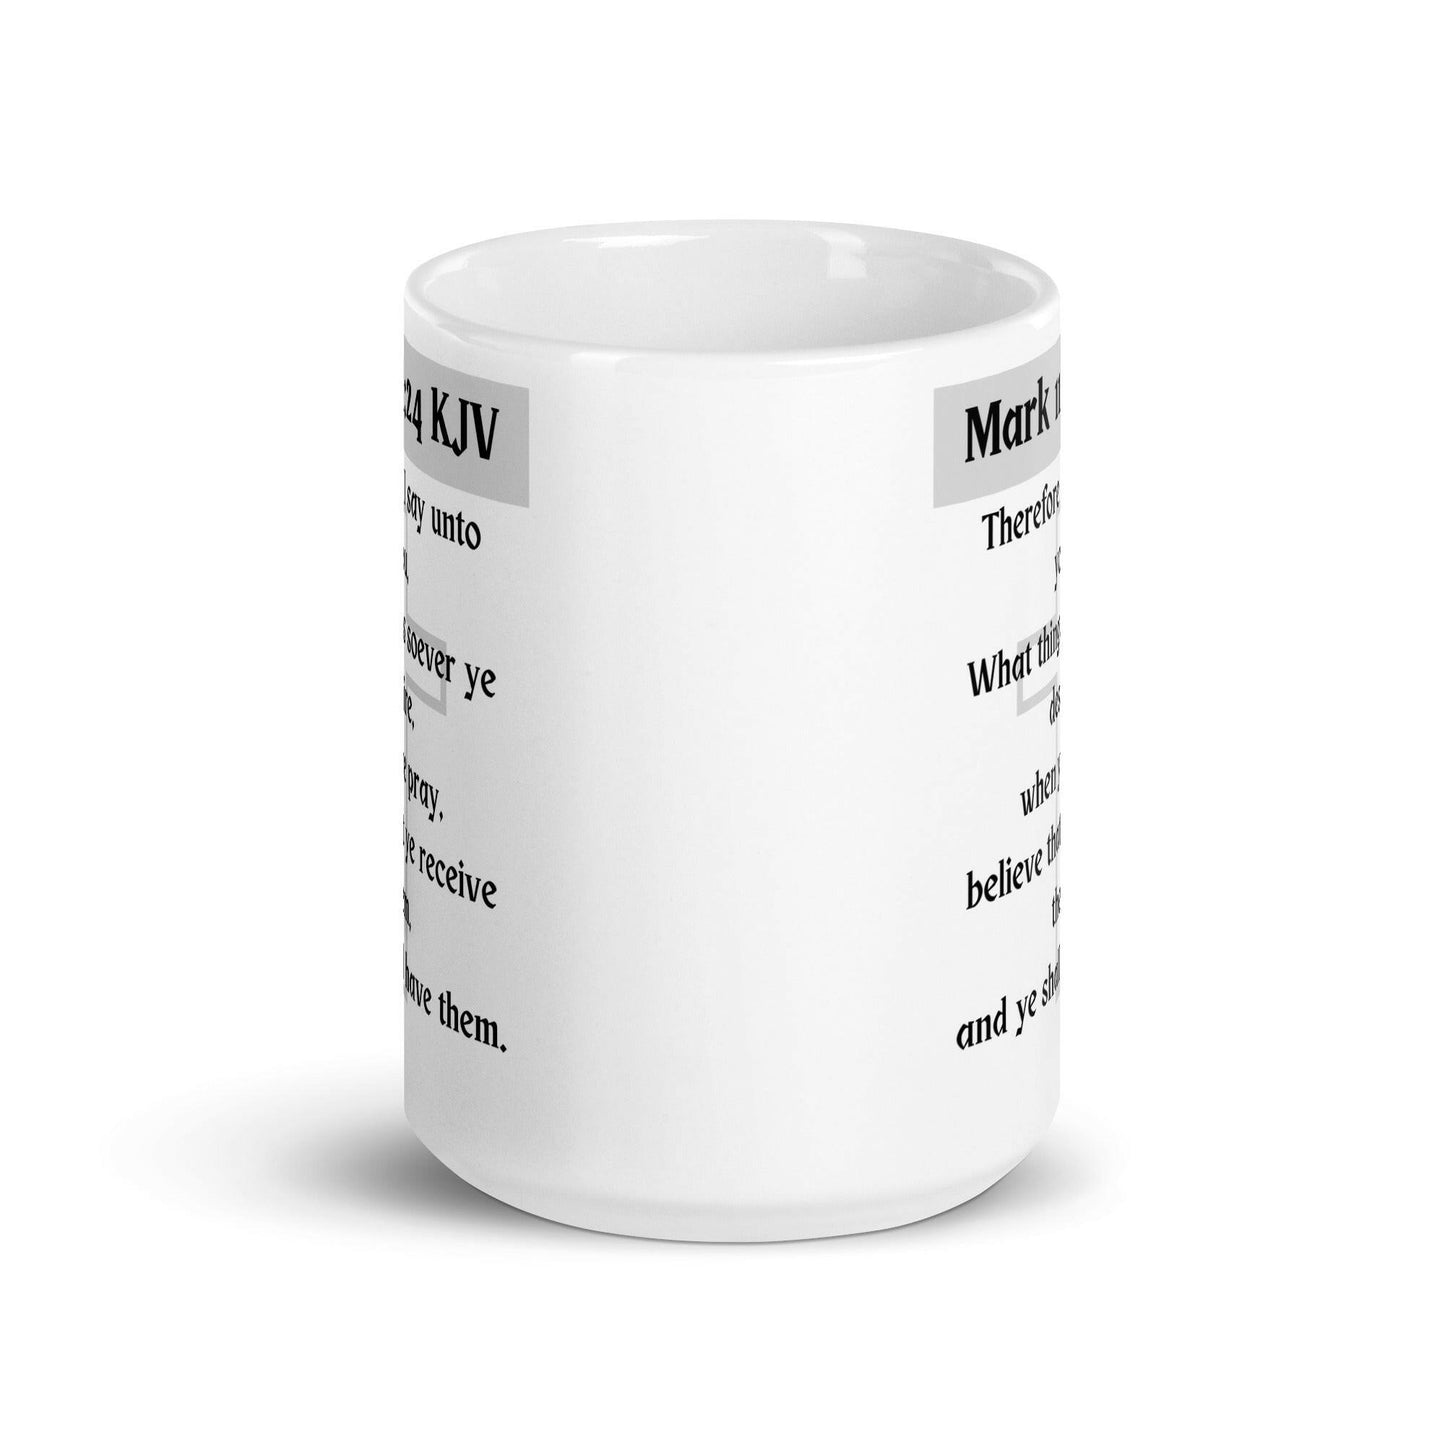 Mark 11:24 - White Glossy Mug